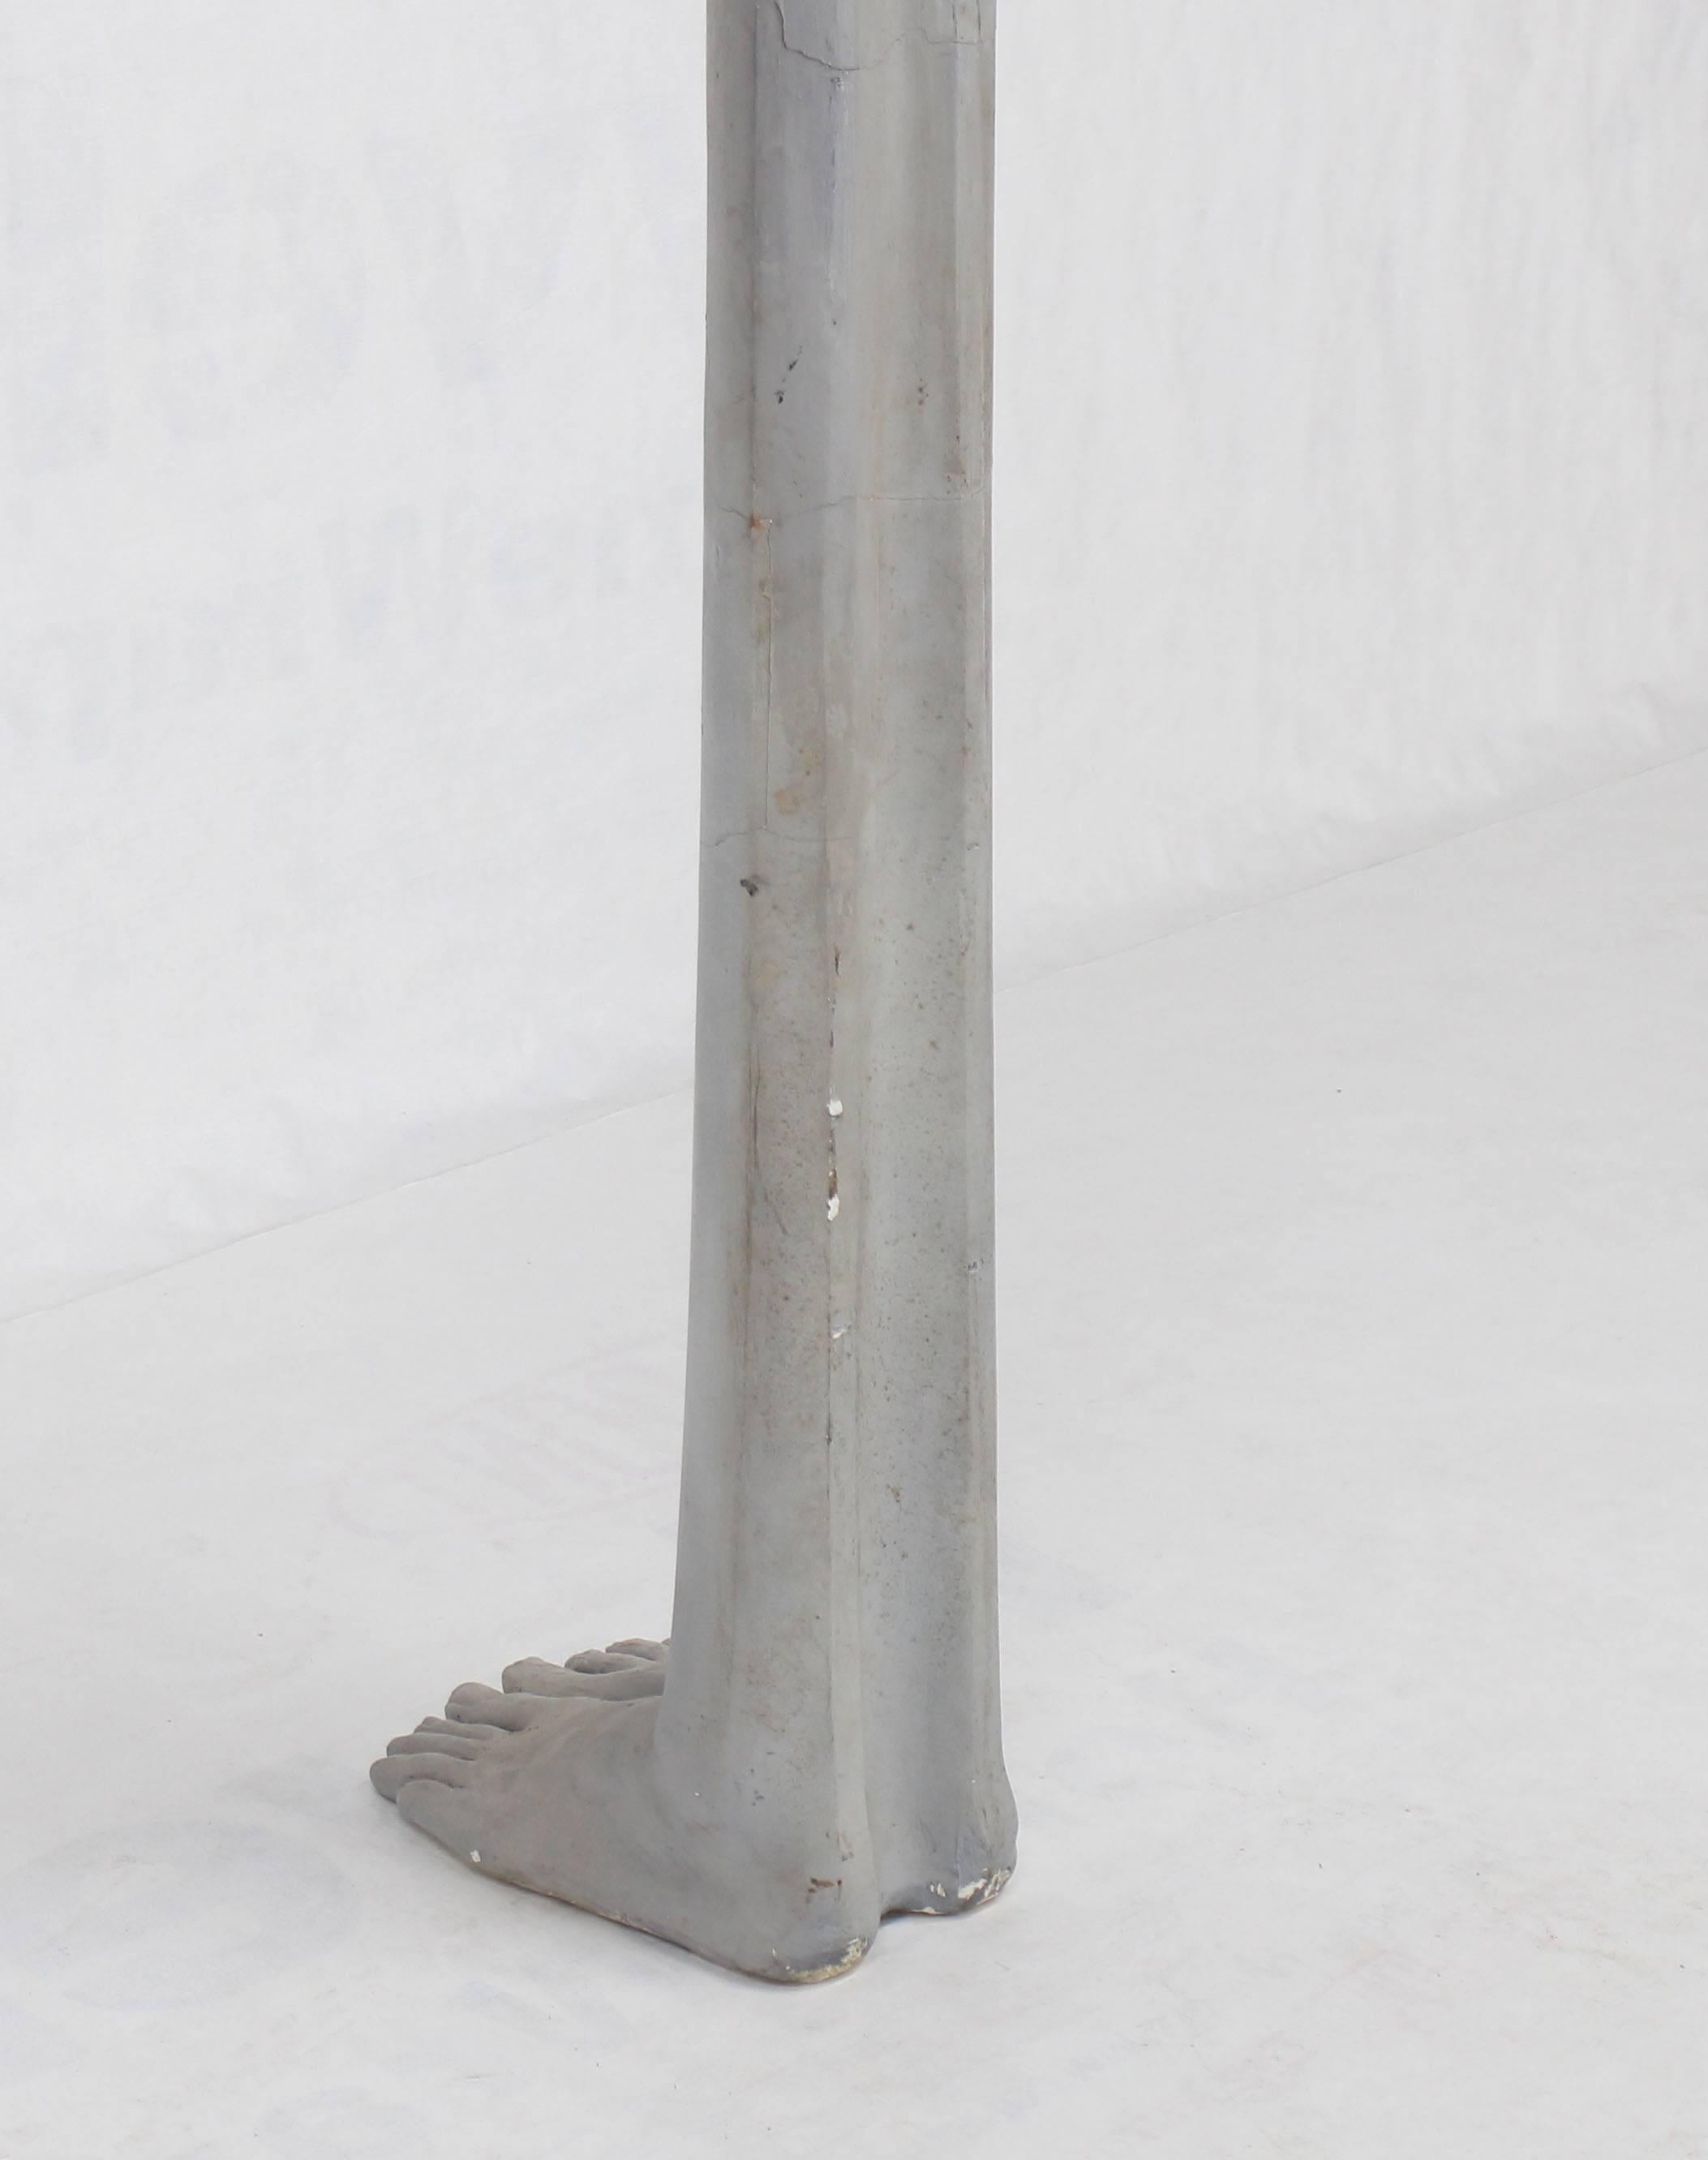 Abstract Modern Pop Art Sculpture of Smile Standing on Feet 1